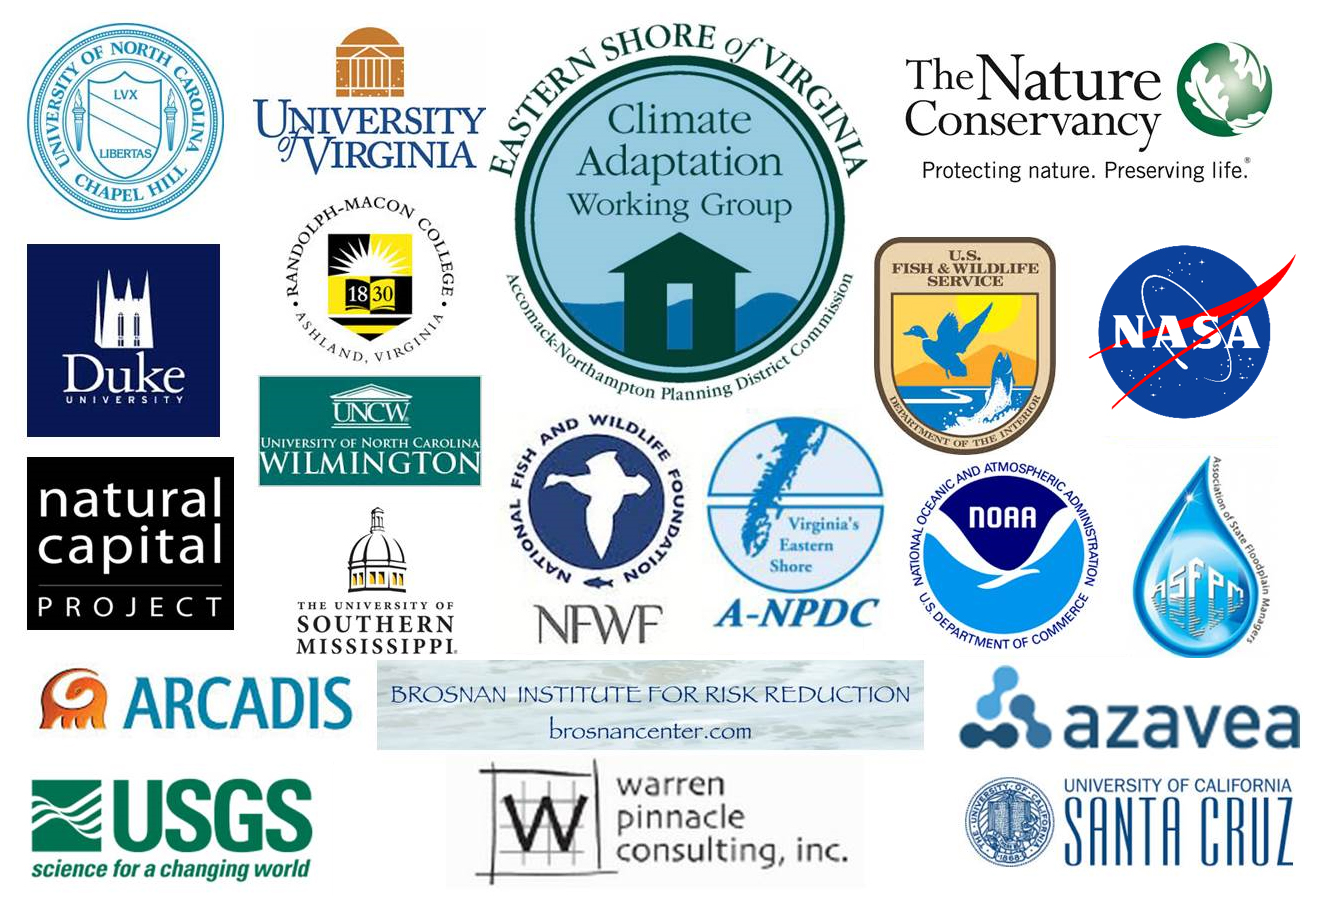 Feb2016_NFWF Partners Logos Collage - correct NASA.jpg